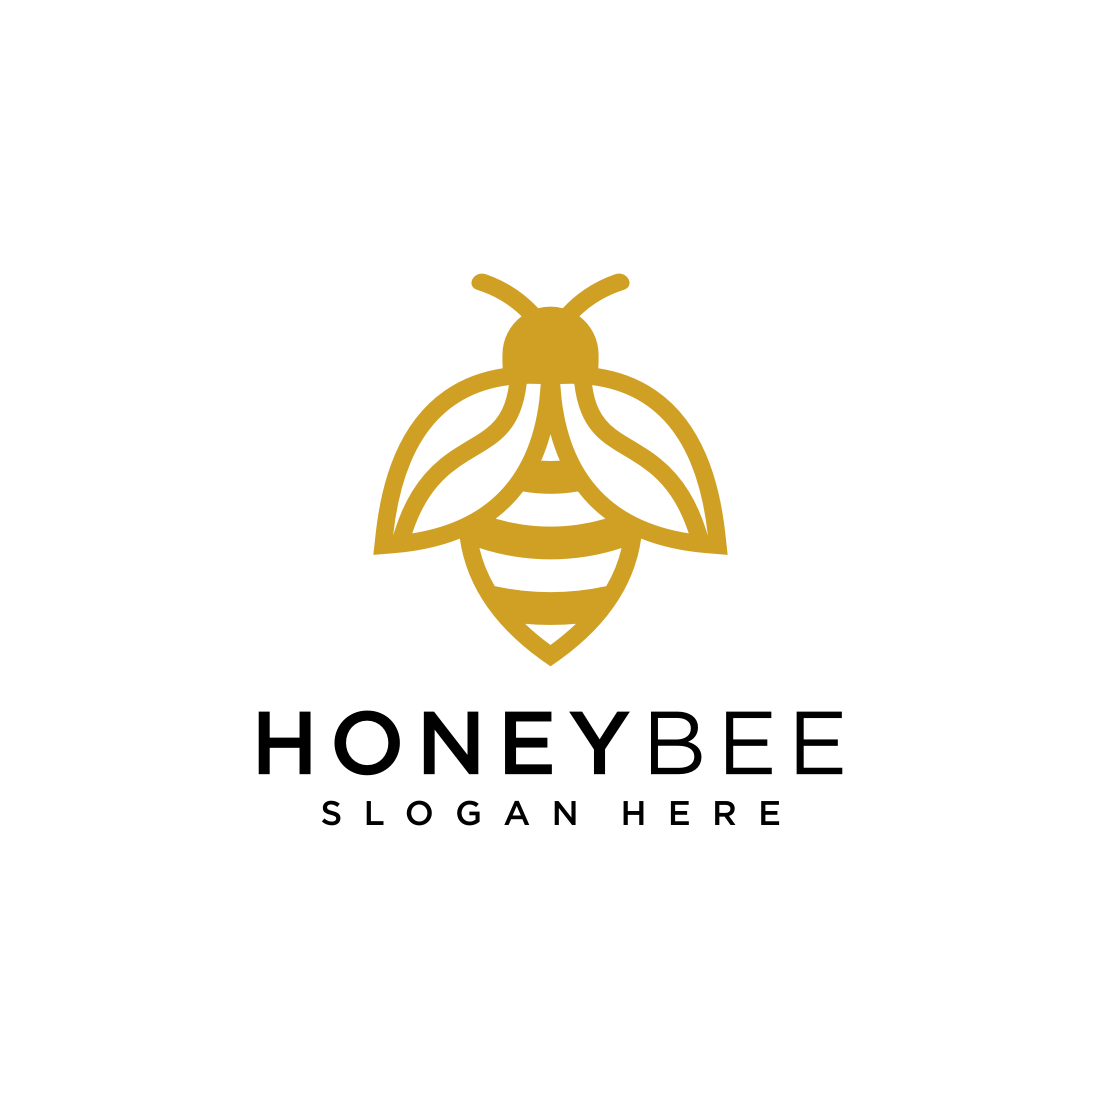 Four honey logo Royalty Free Vector Image - VectorStock